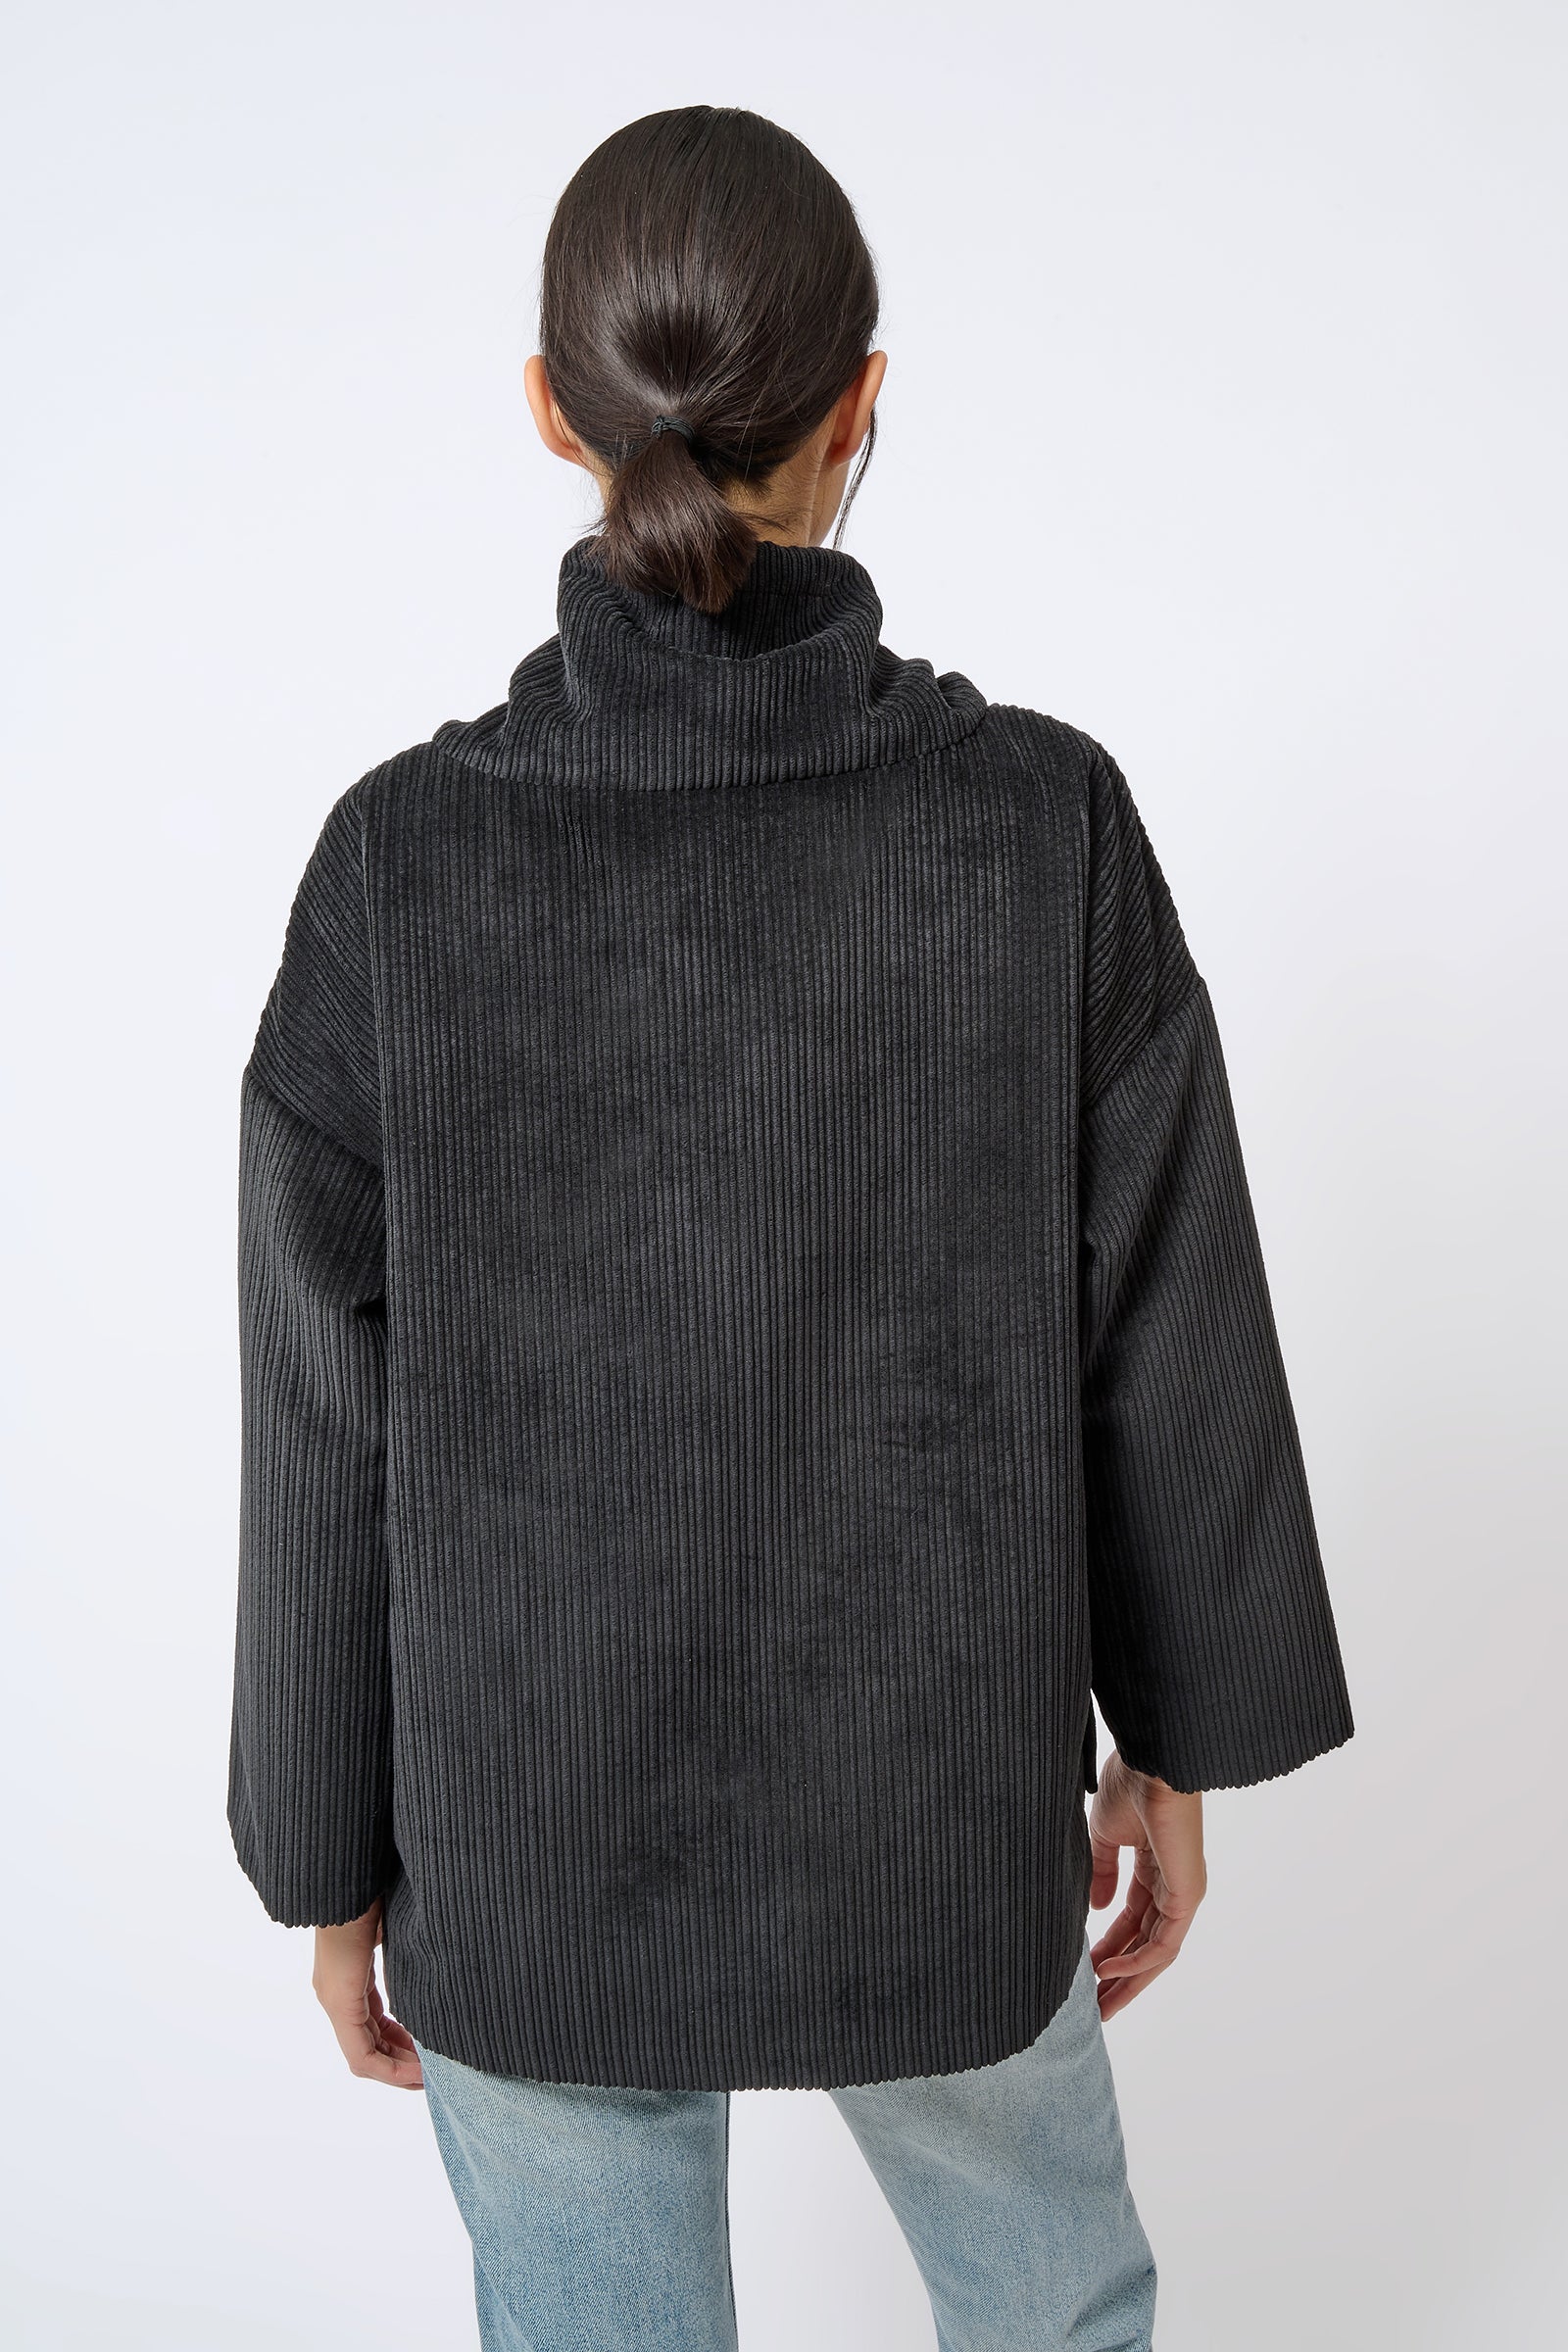 Kal Rieman Debbie Drawstring Pullover in Black on Model Back View